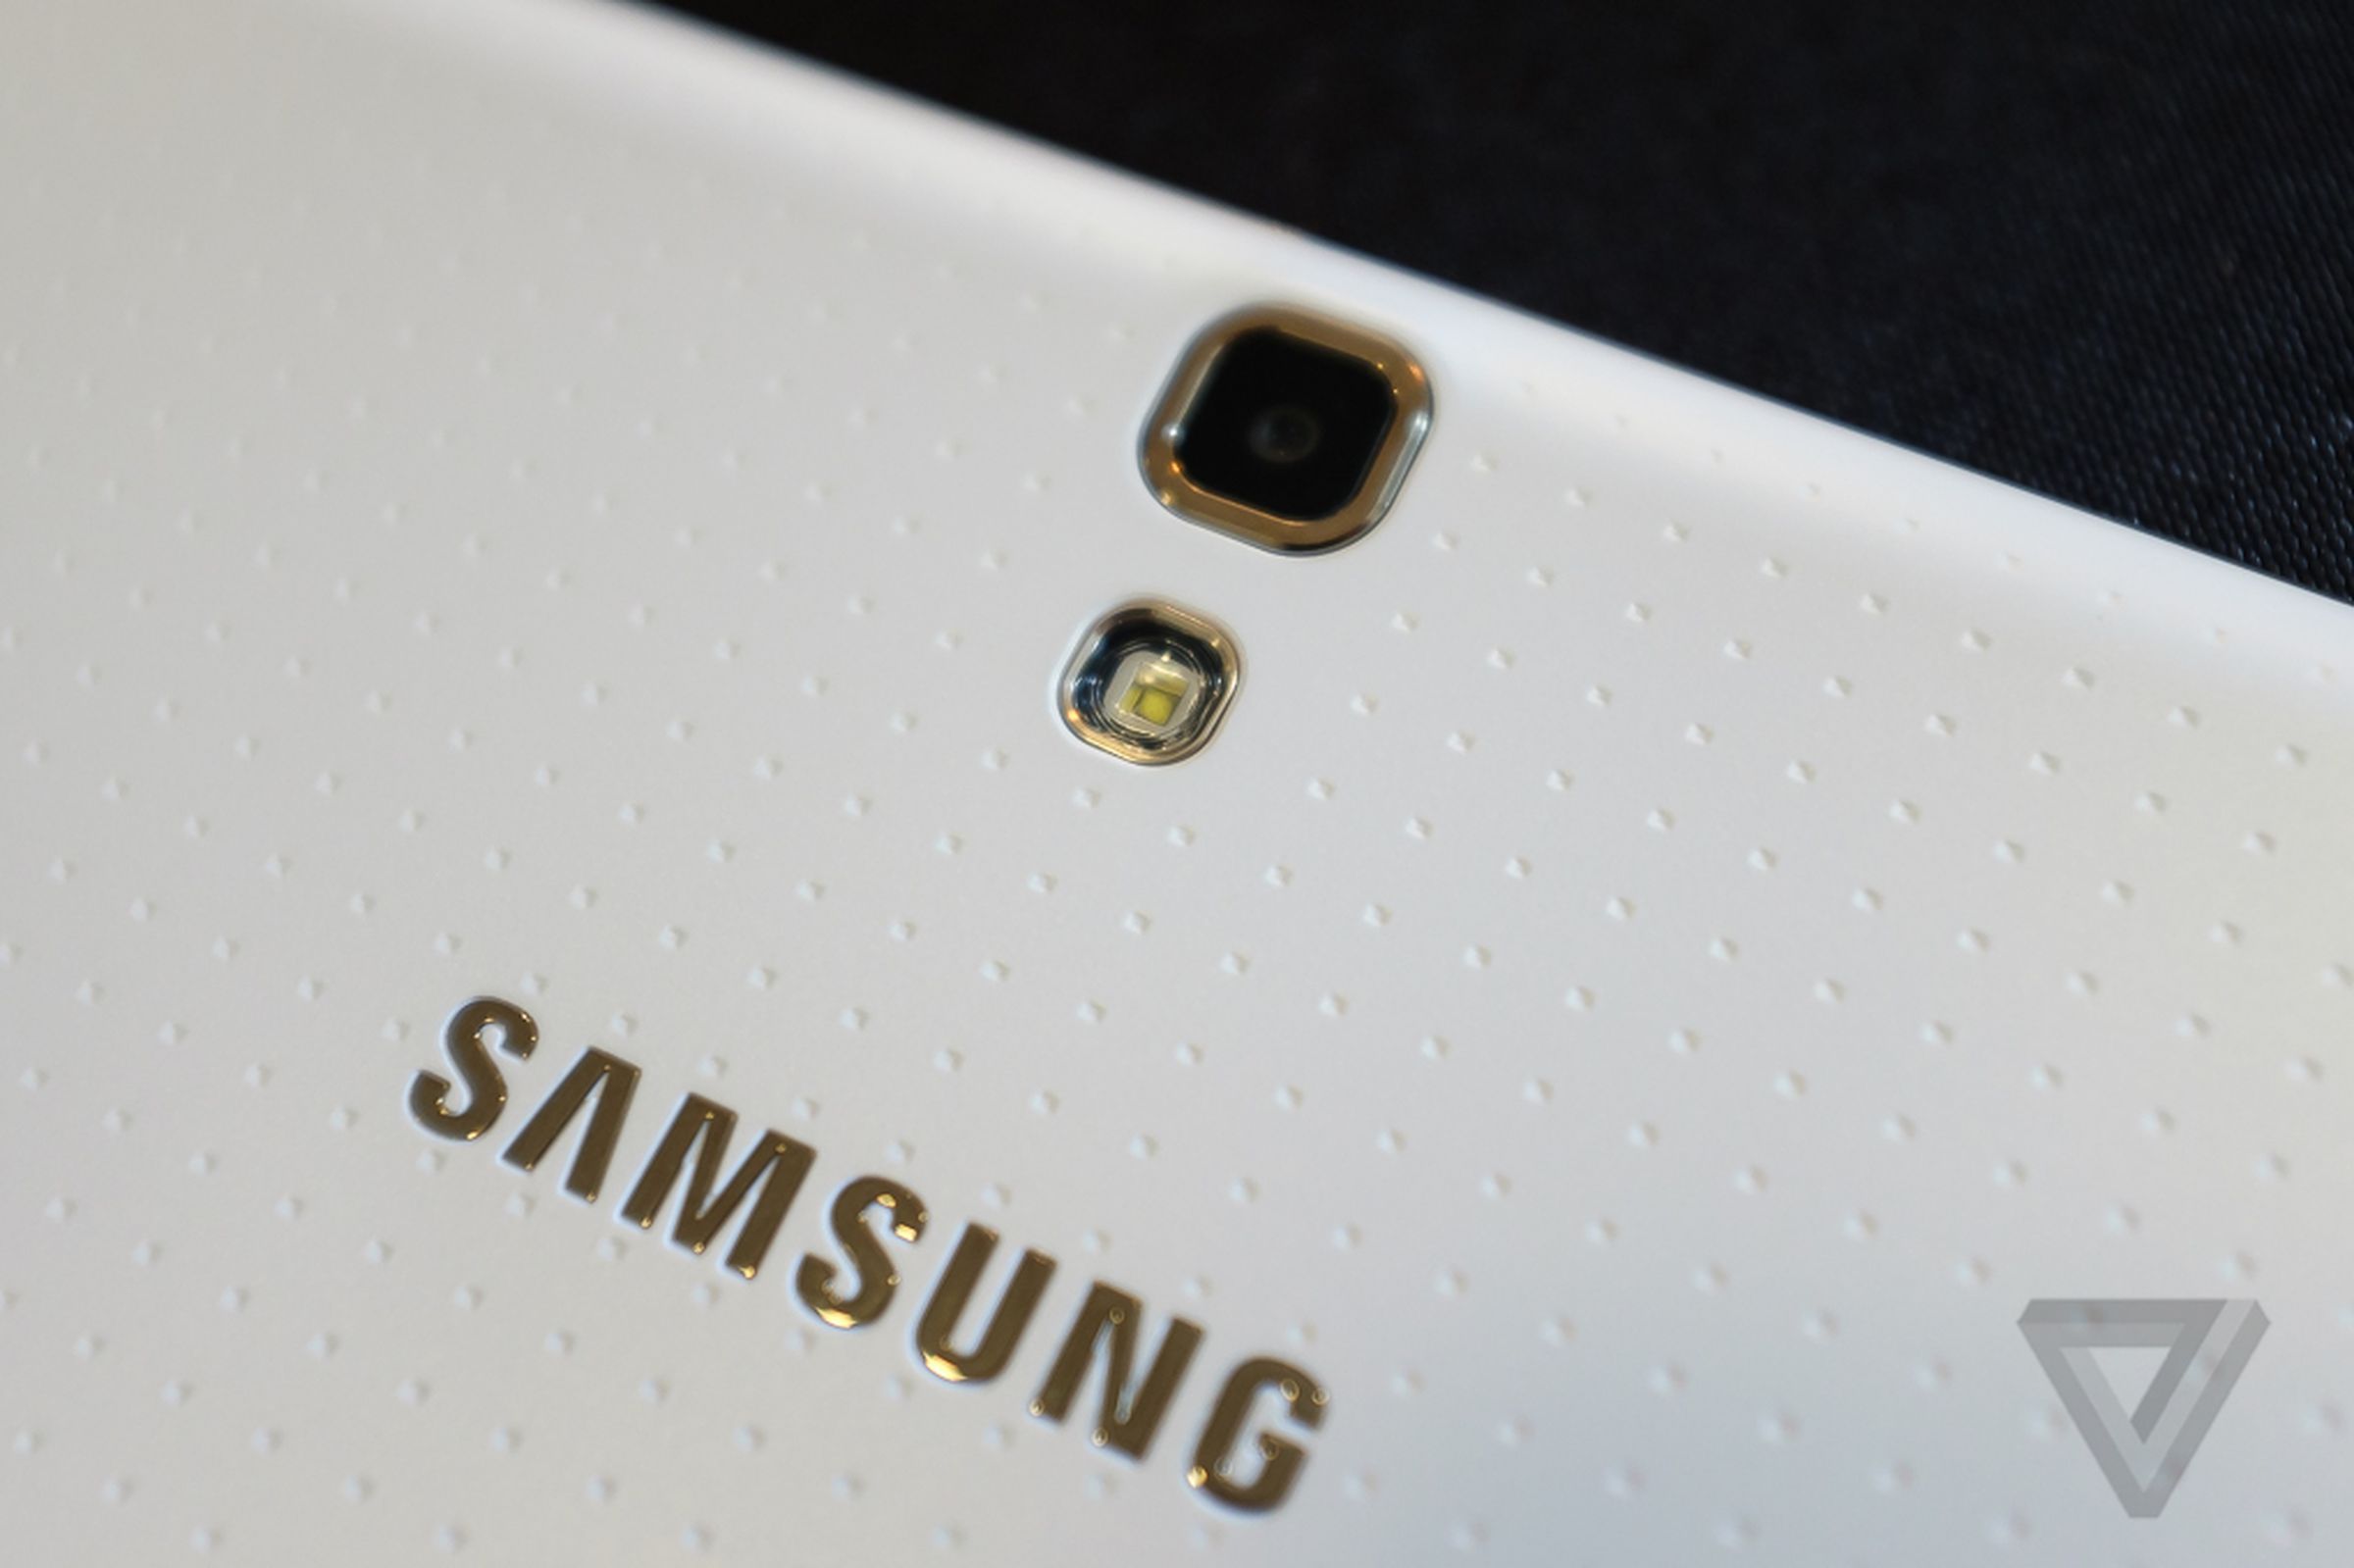 Samsung Galaxy Tab S hands-on photos